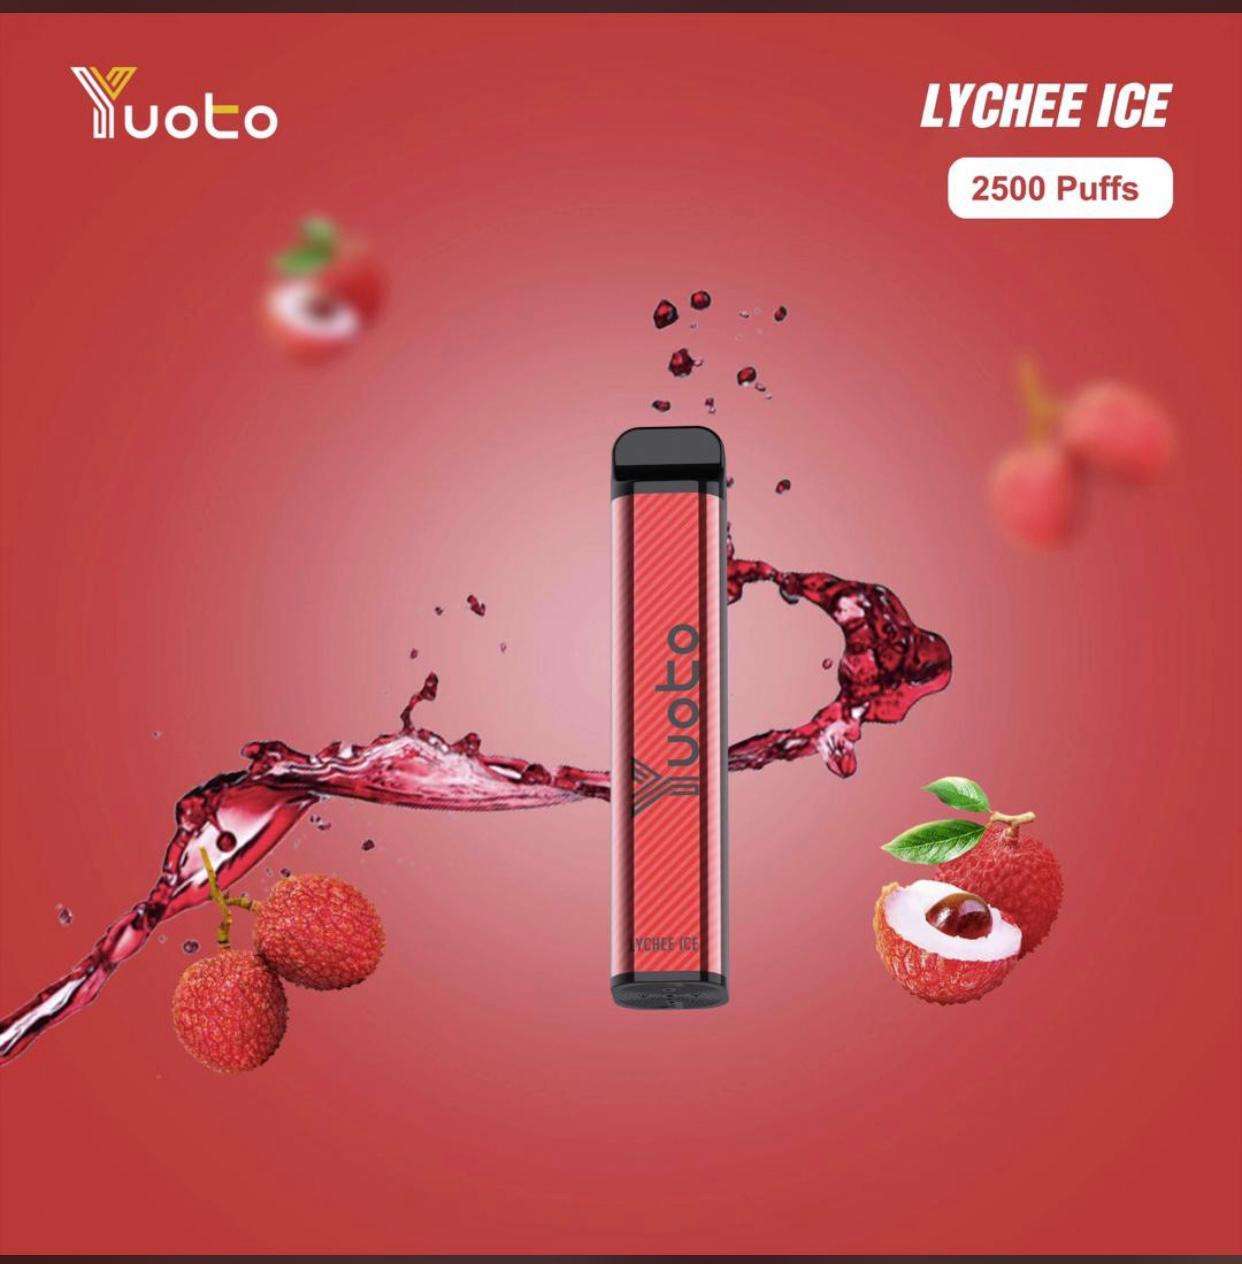 Yuoto xxl disposable lychee ice 2500 puffs